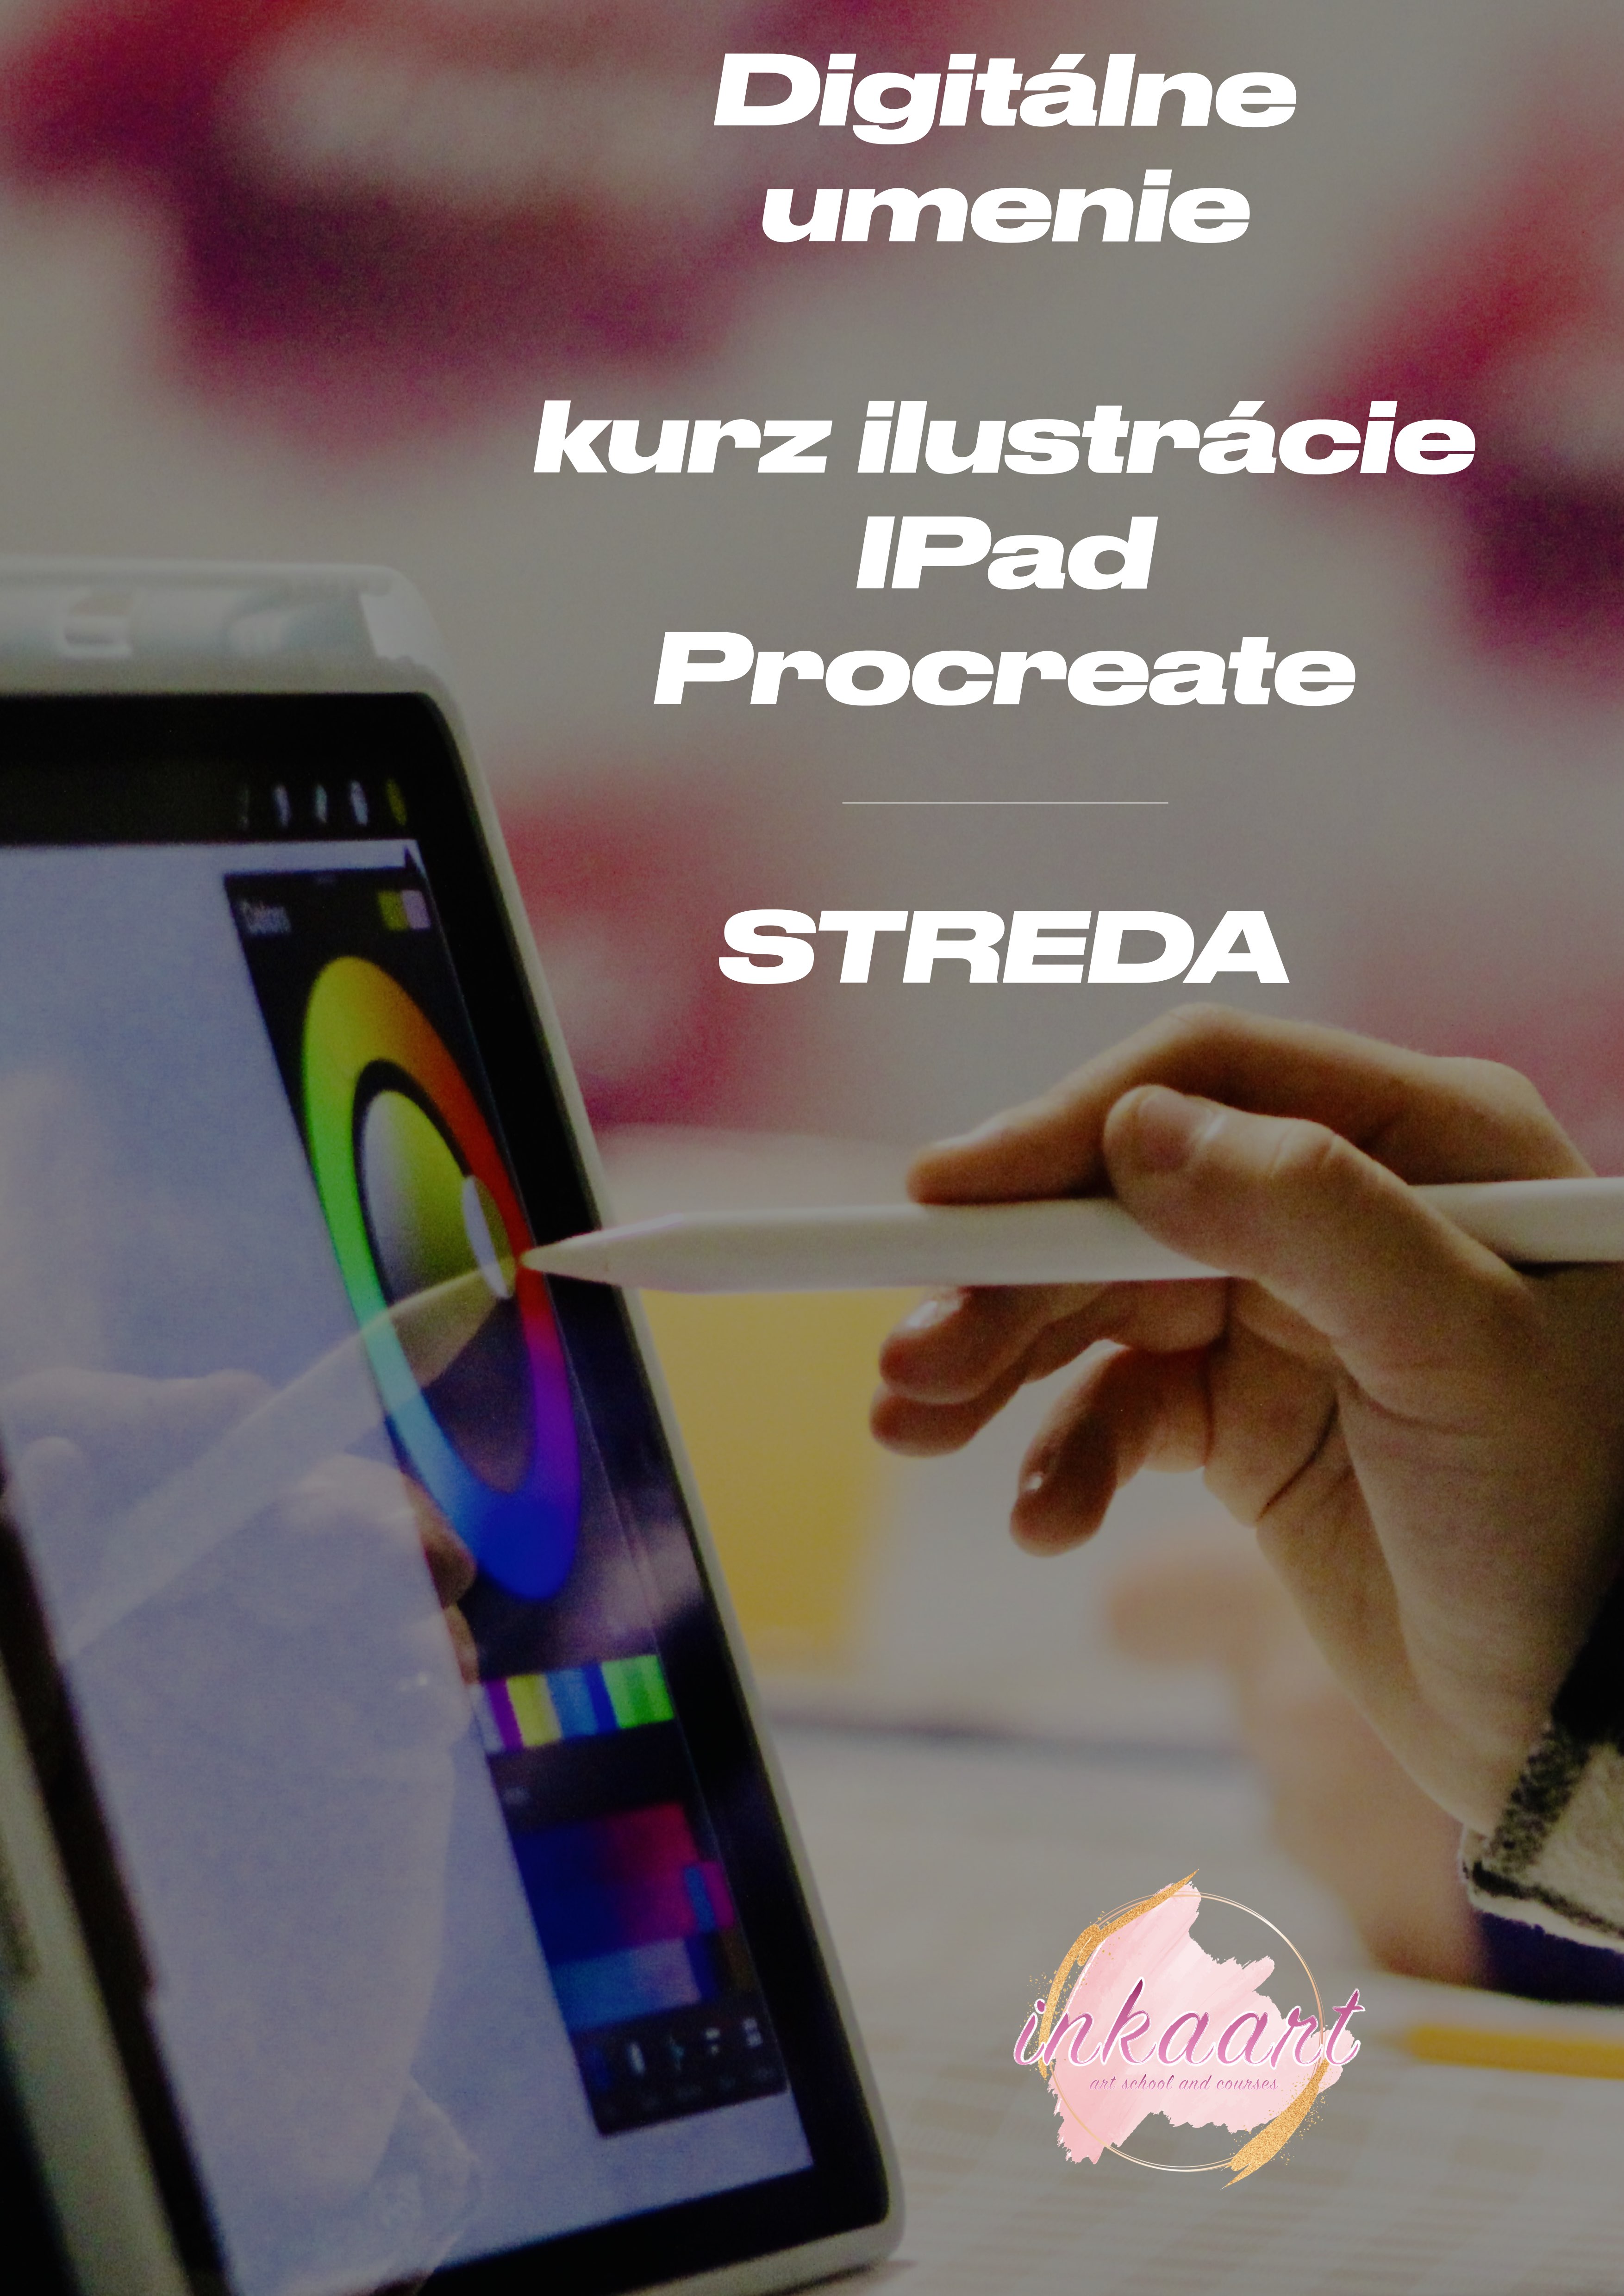 4 | (STREDA) Kurz ilustrácie a sketchingu for kids Ipad Procreate